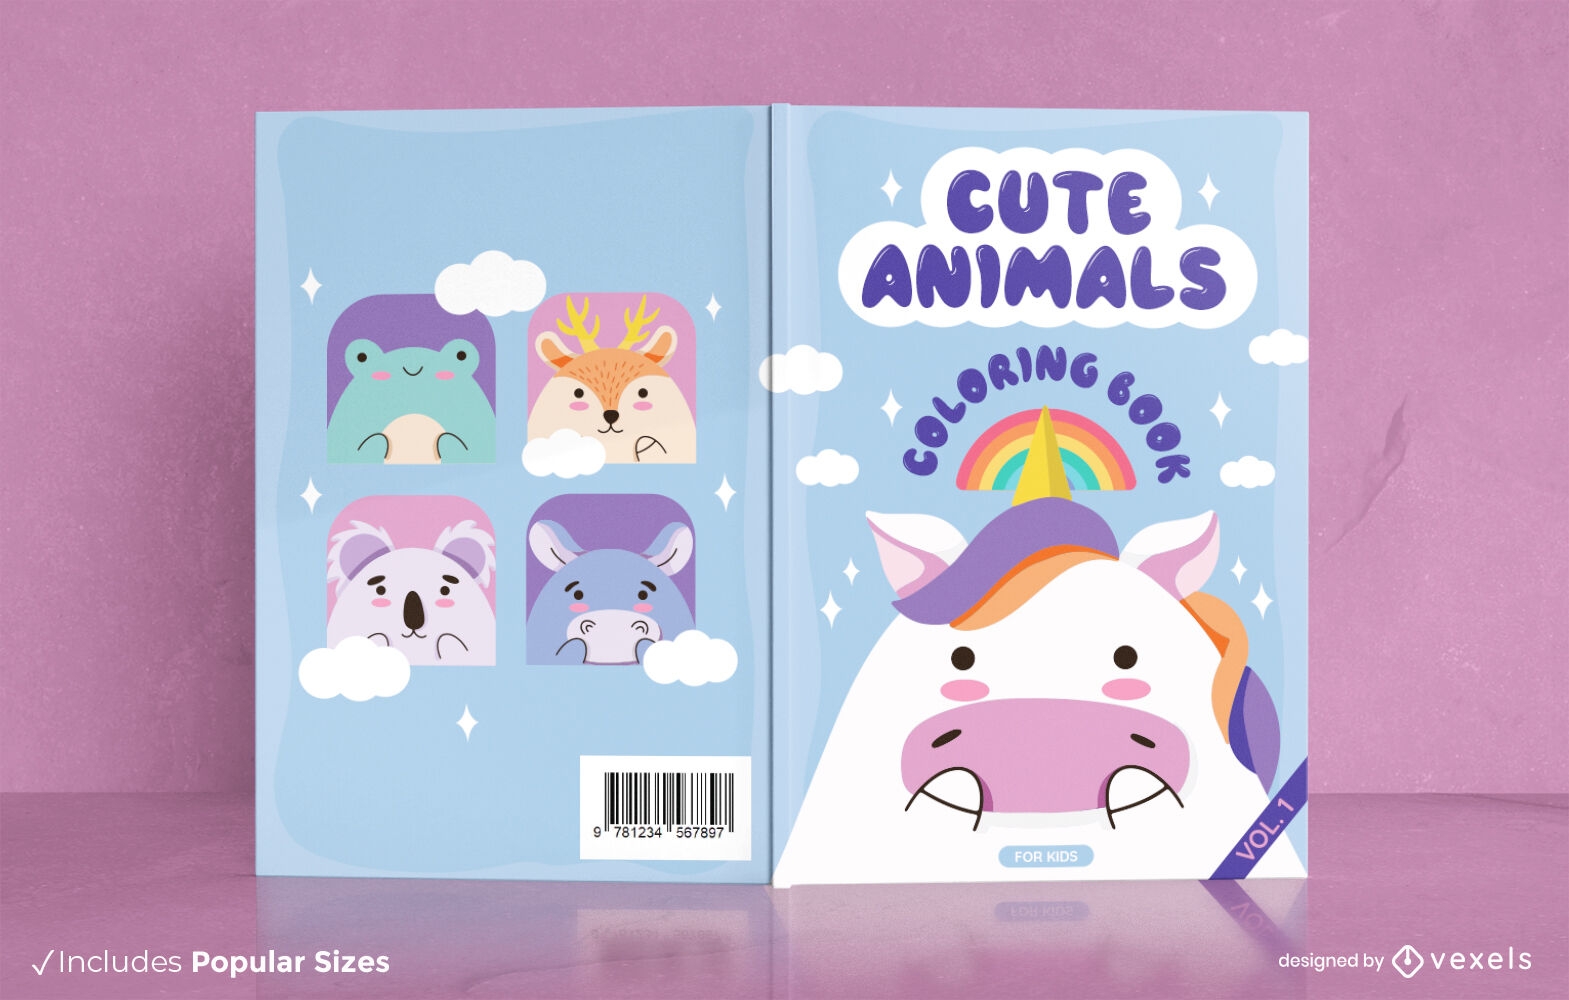 Cute cartoon animals coloring book cover design